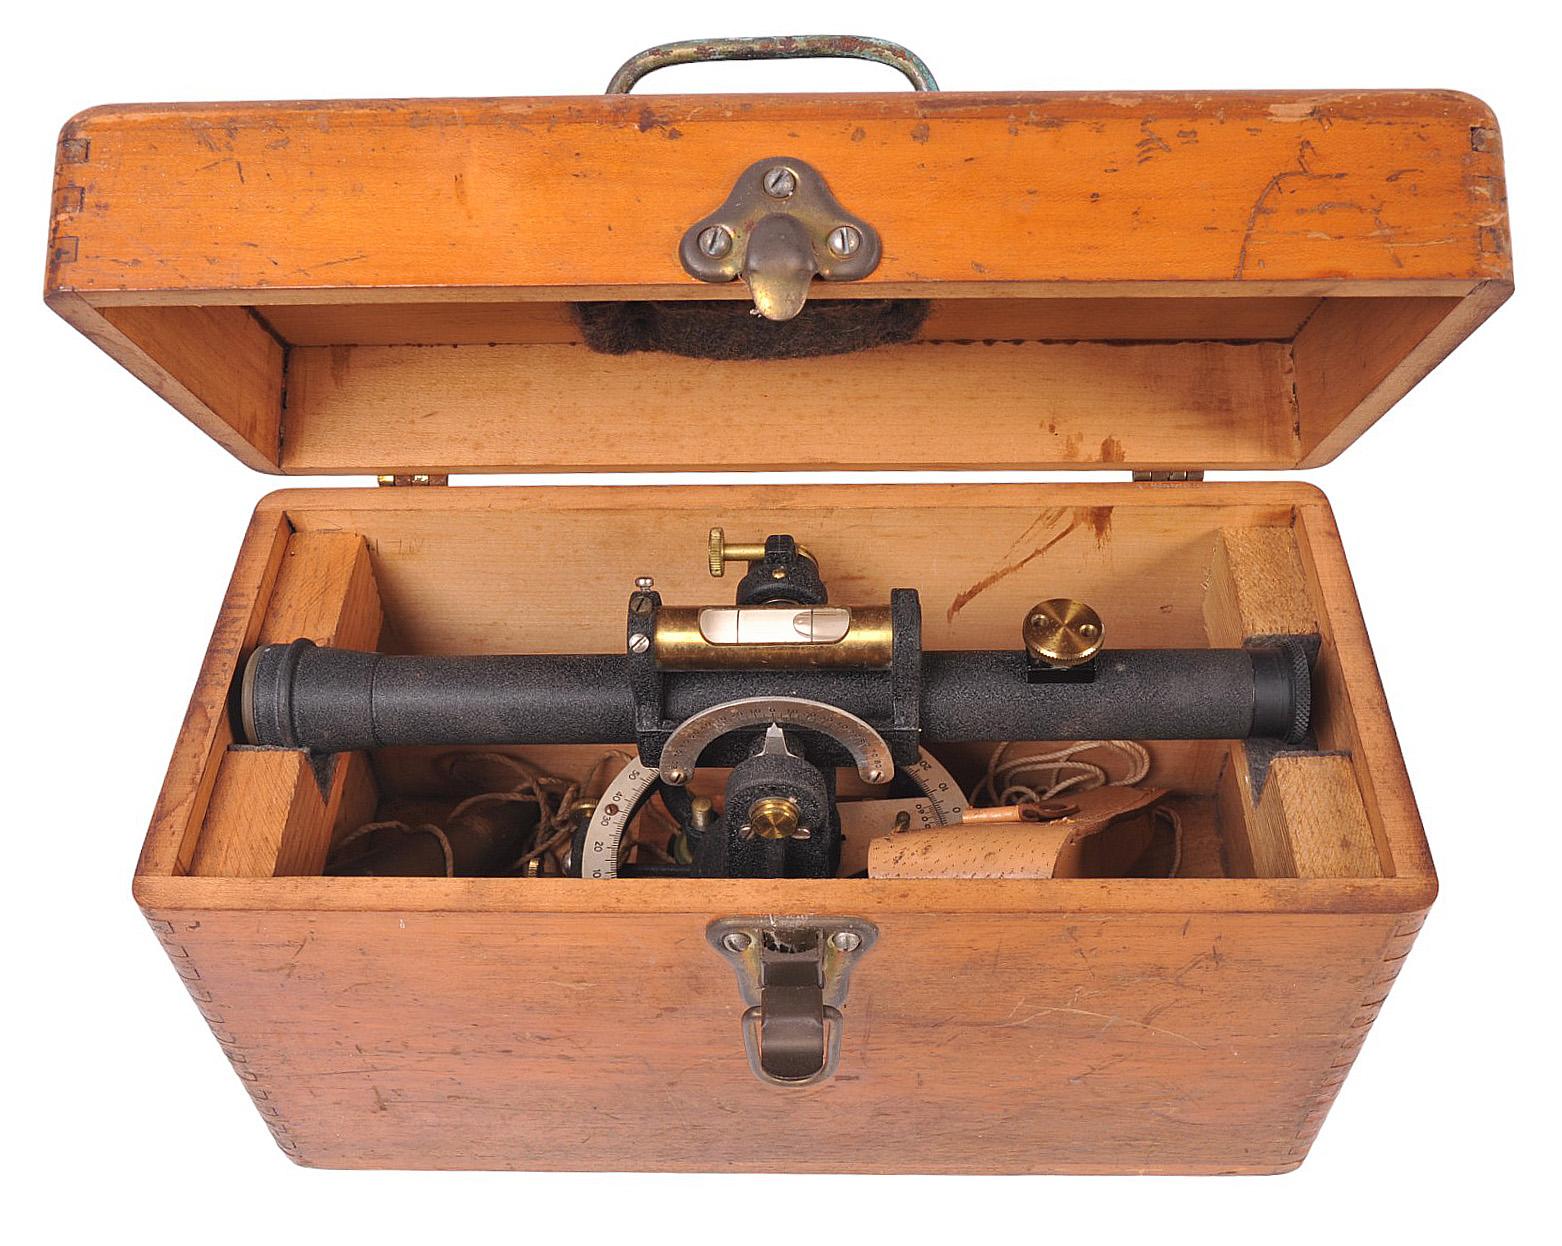 Antique US Surveying Transit, Plum-Bob, Accessories and Case (RSO)